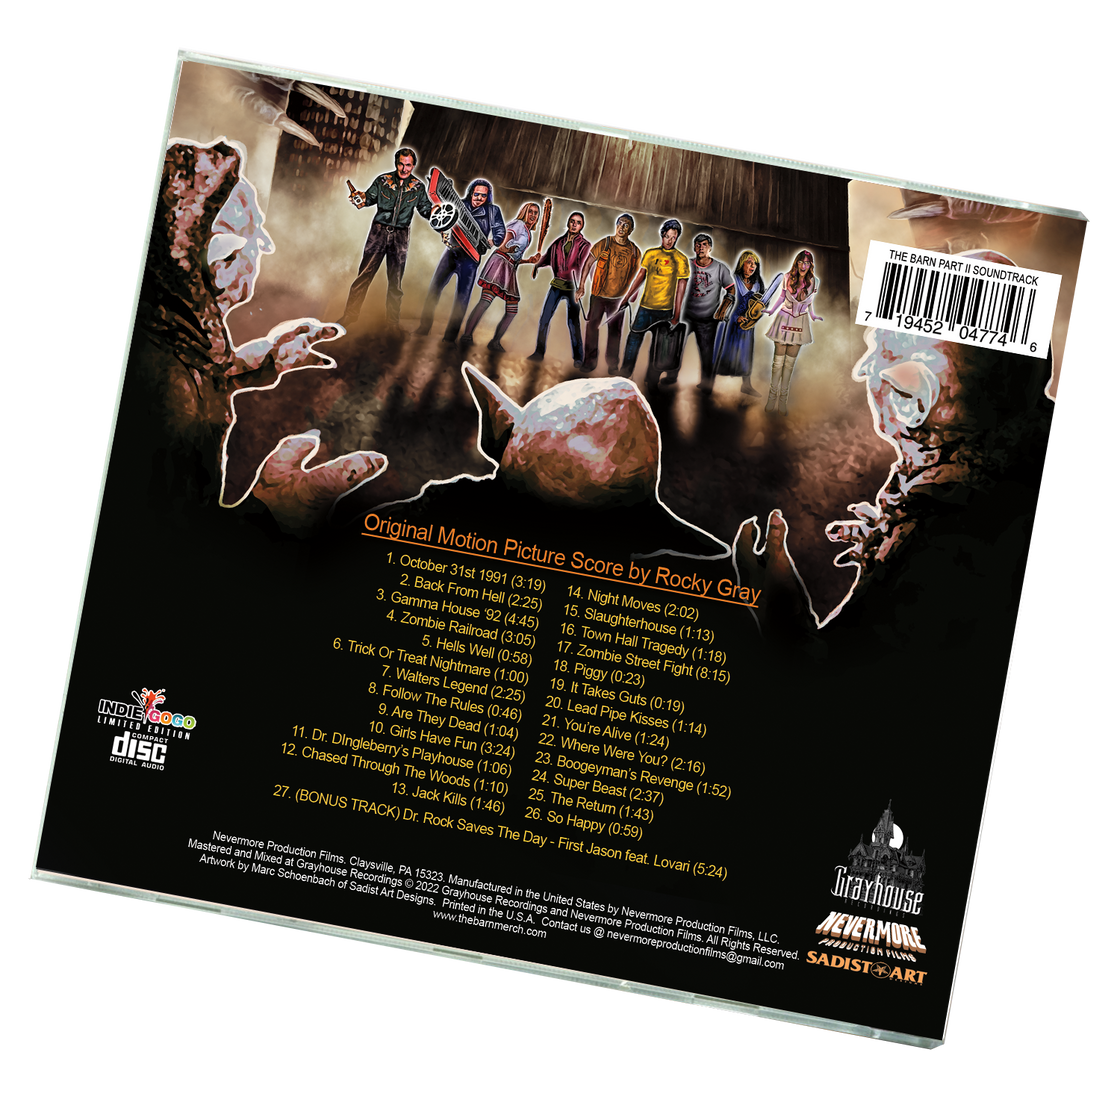 The Barn Part II - Soundtrack - CD Score by Rocky Gray